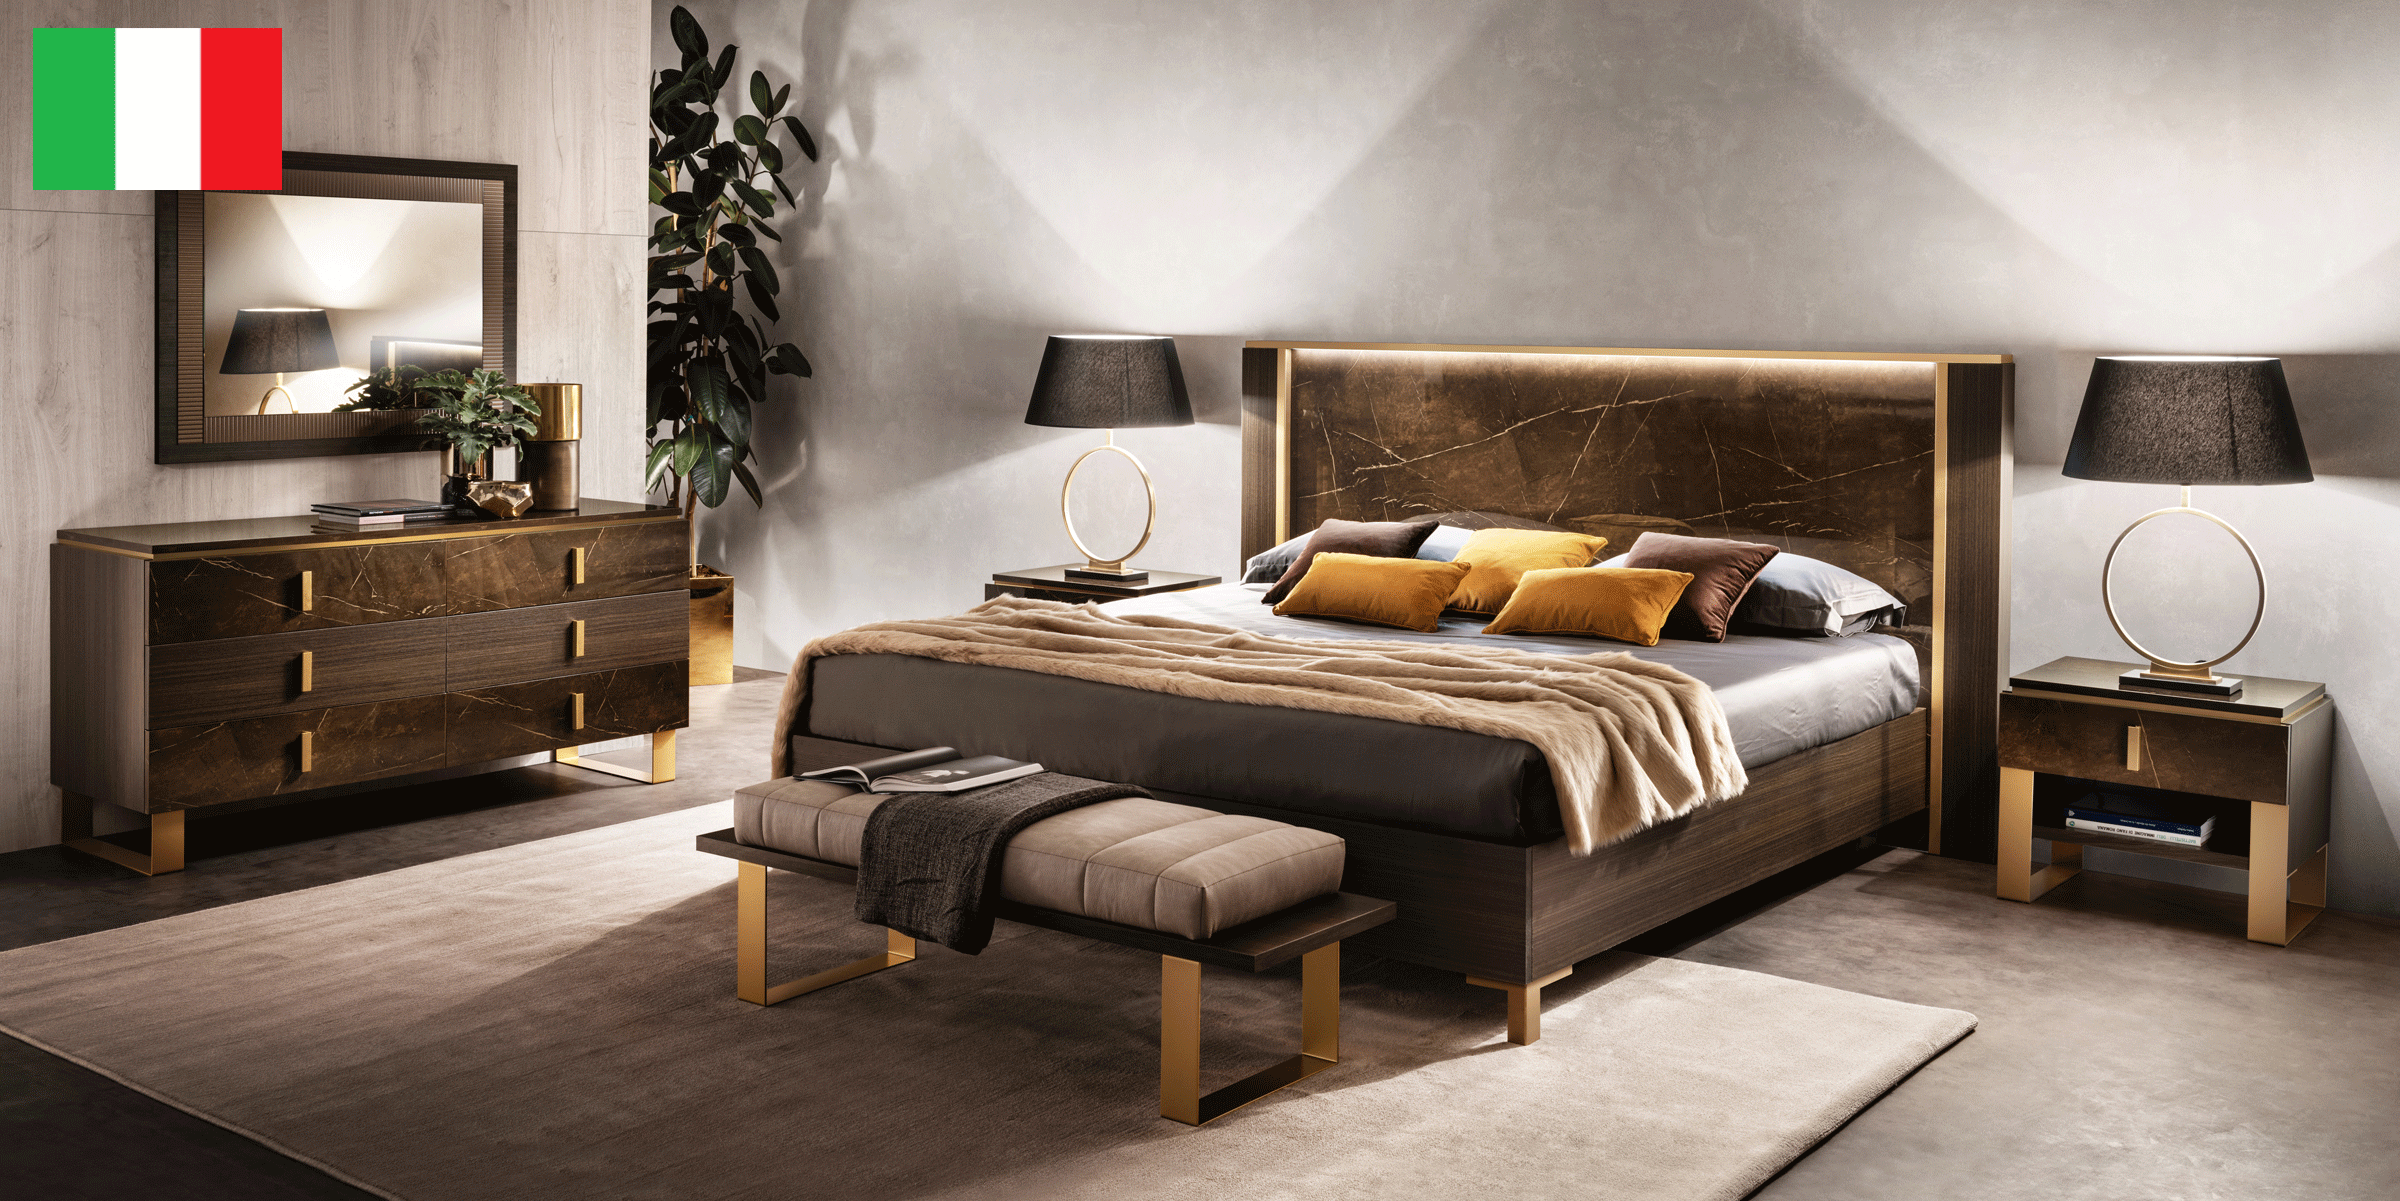 Bedroom Furniture Beds Essenza Bedroom by Arredoclassic, Italy